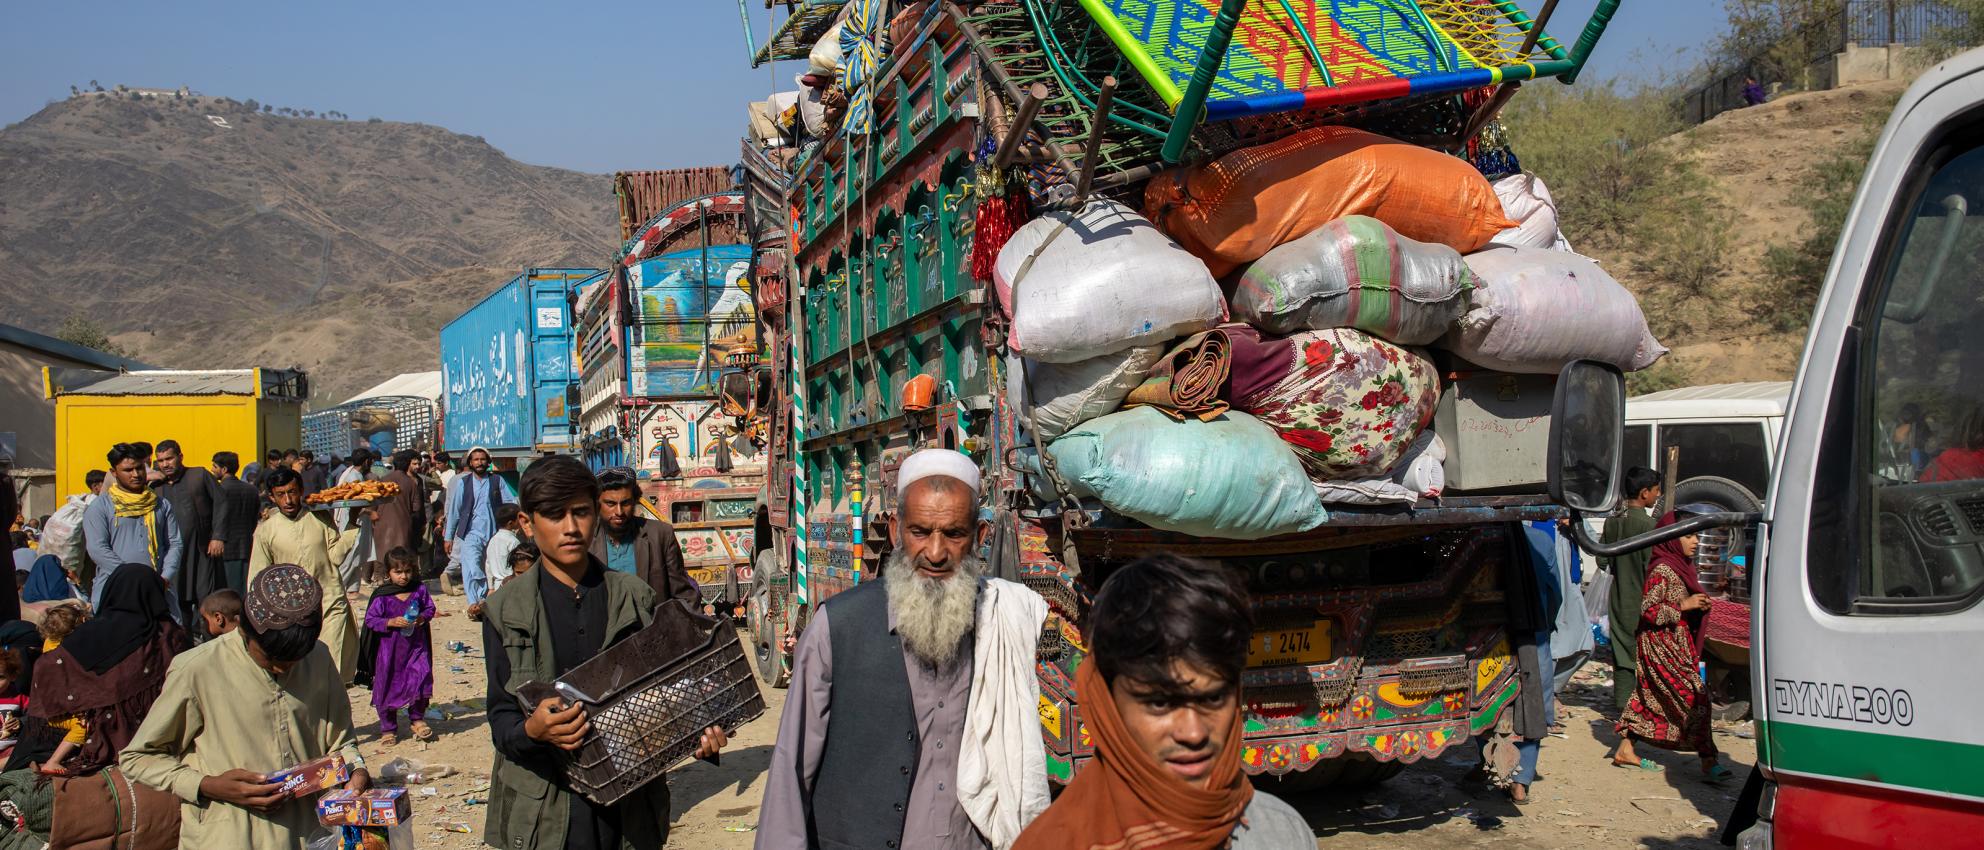 EU announces €150 million in humanitarian aid for Afghanistan crisis